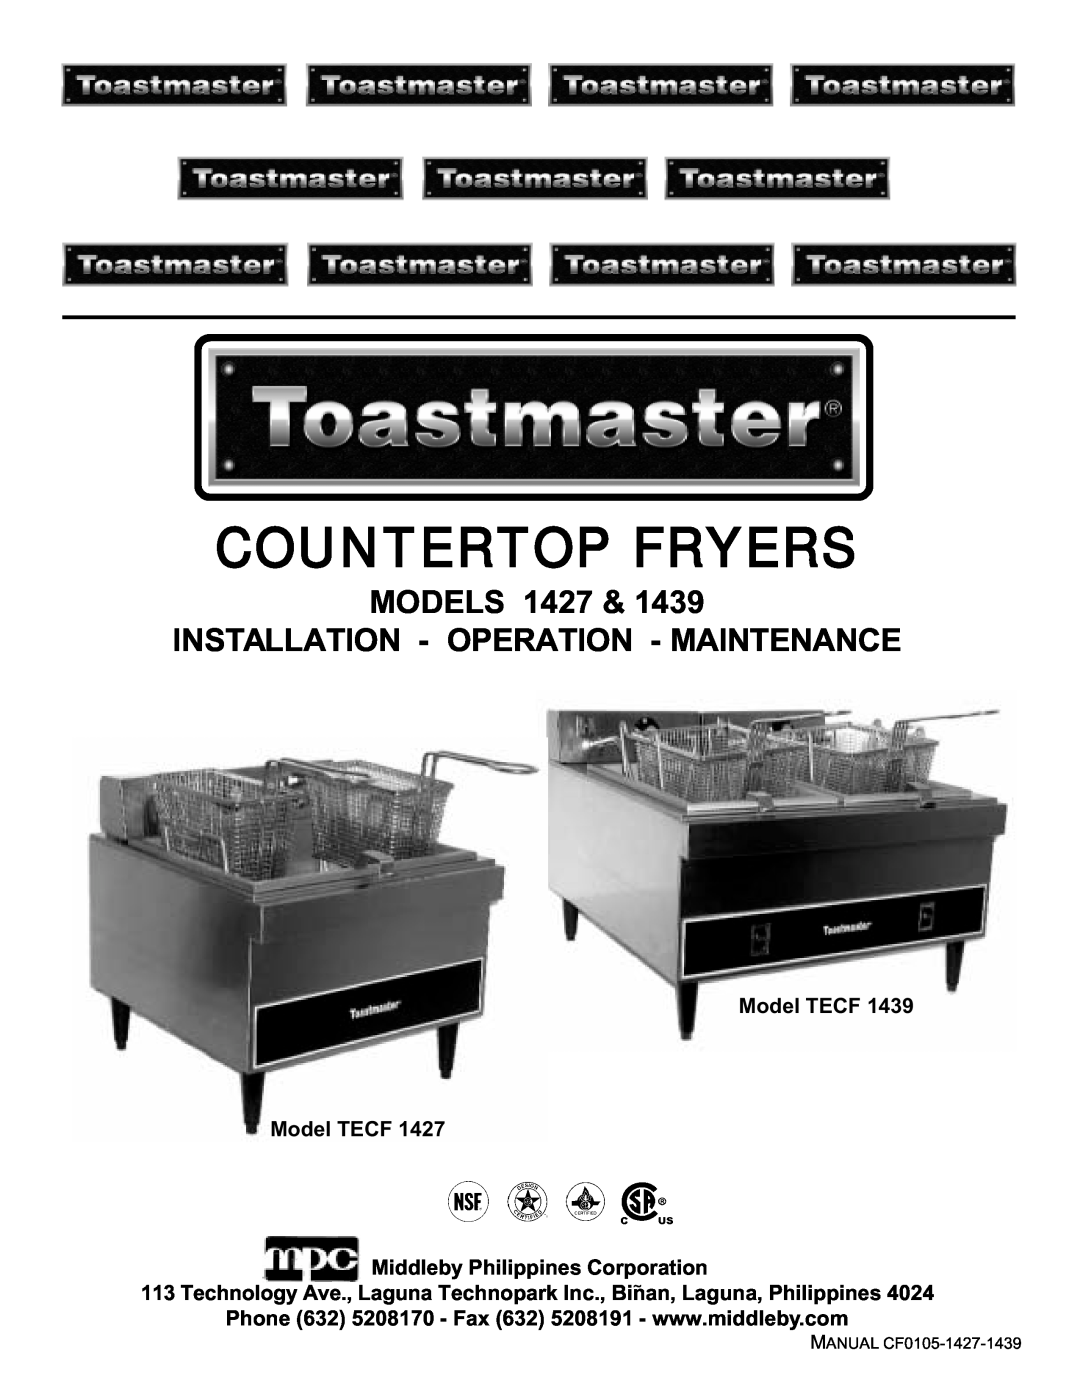 Toastmaster manual Model TECF Model TECF Middleby Philippines Corporation, Countertop Fryers, MANUAL CF0105-1427-1439 